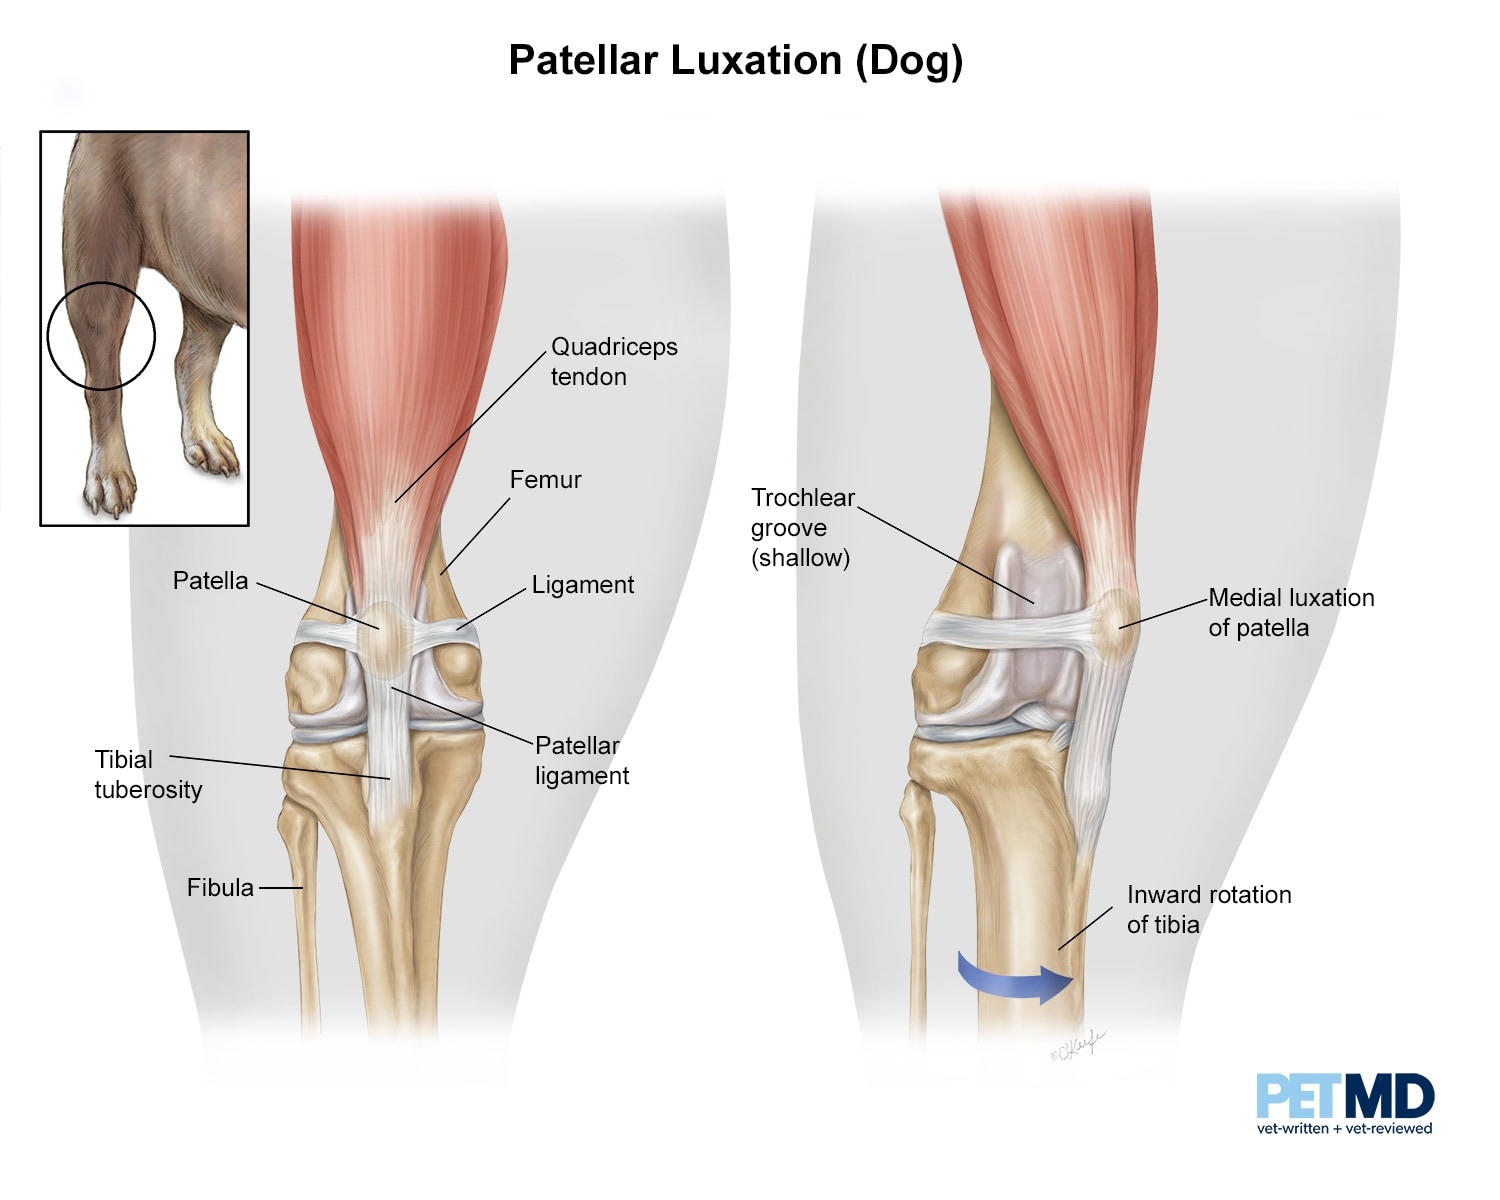 Patellar luxation (dog)